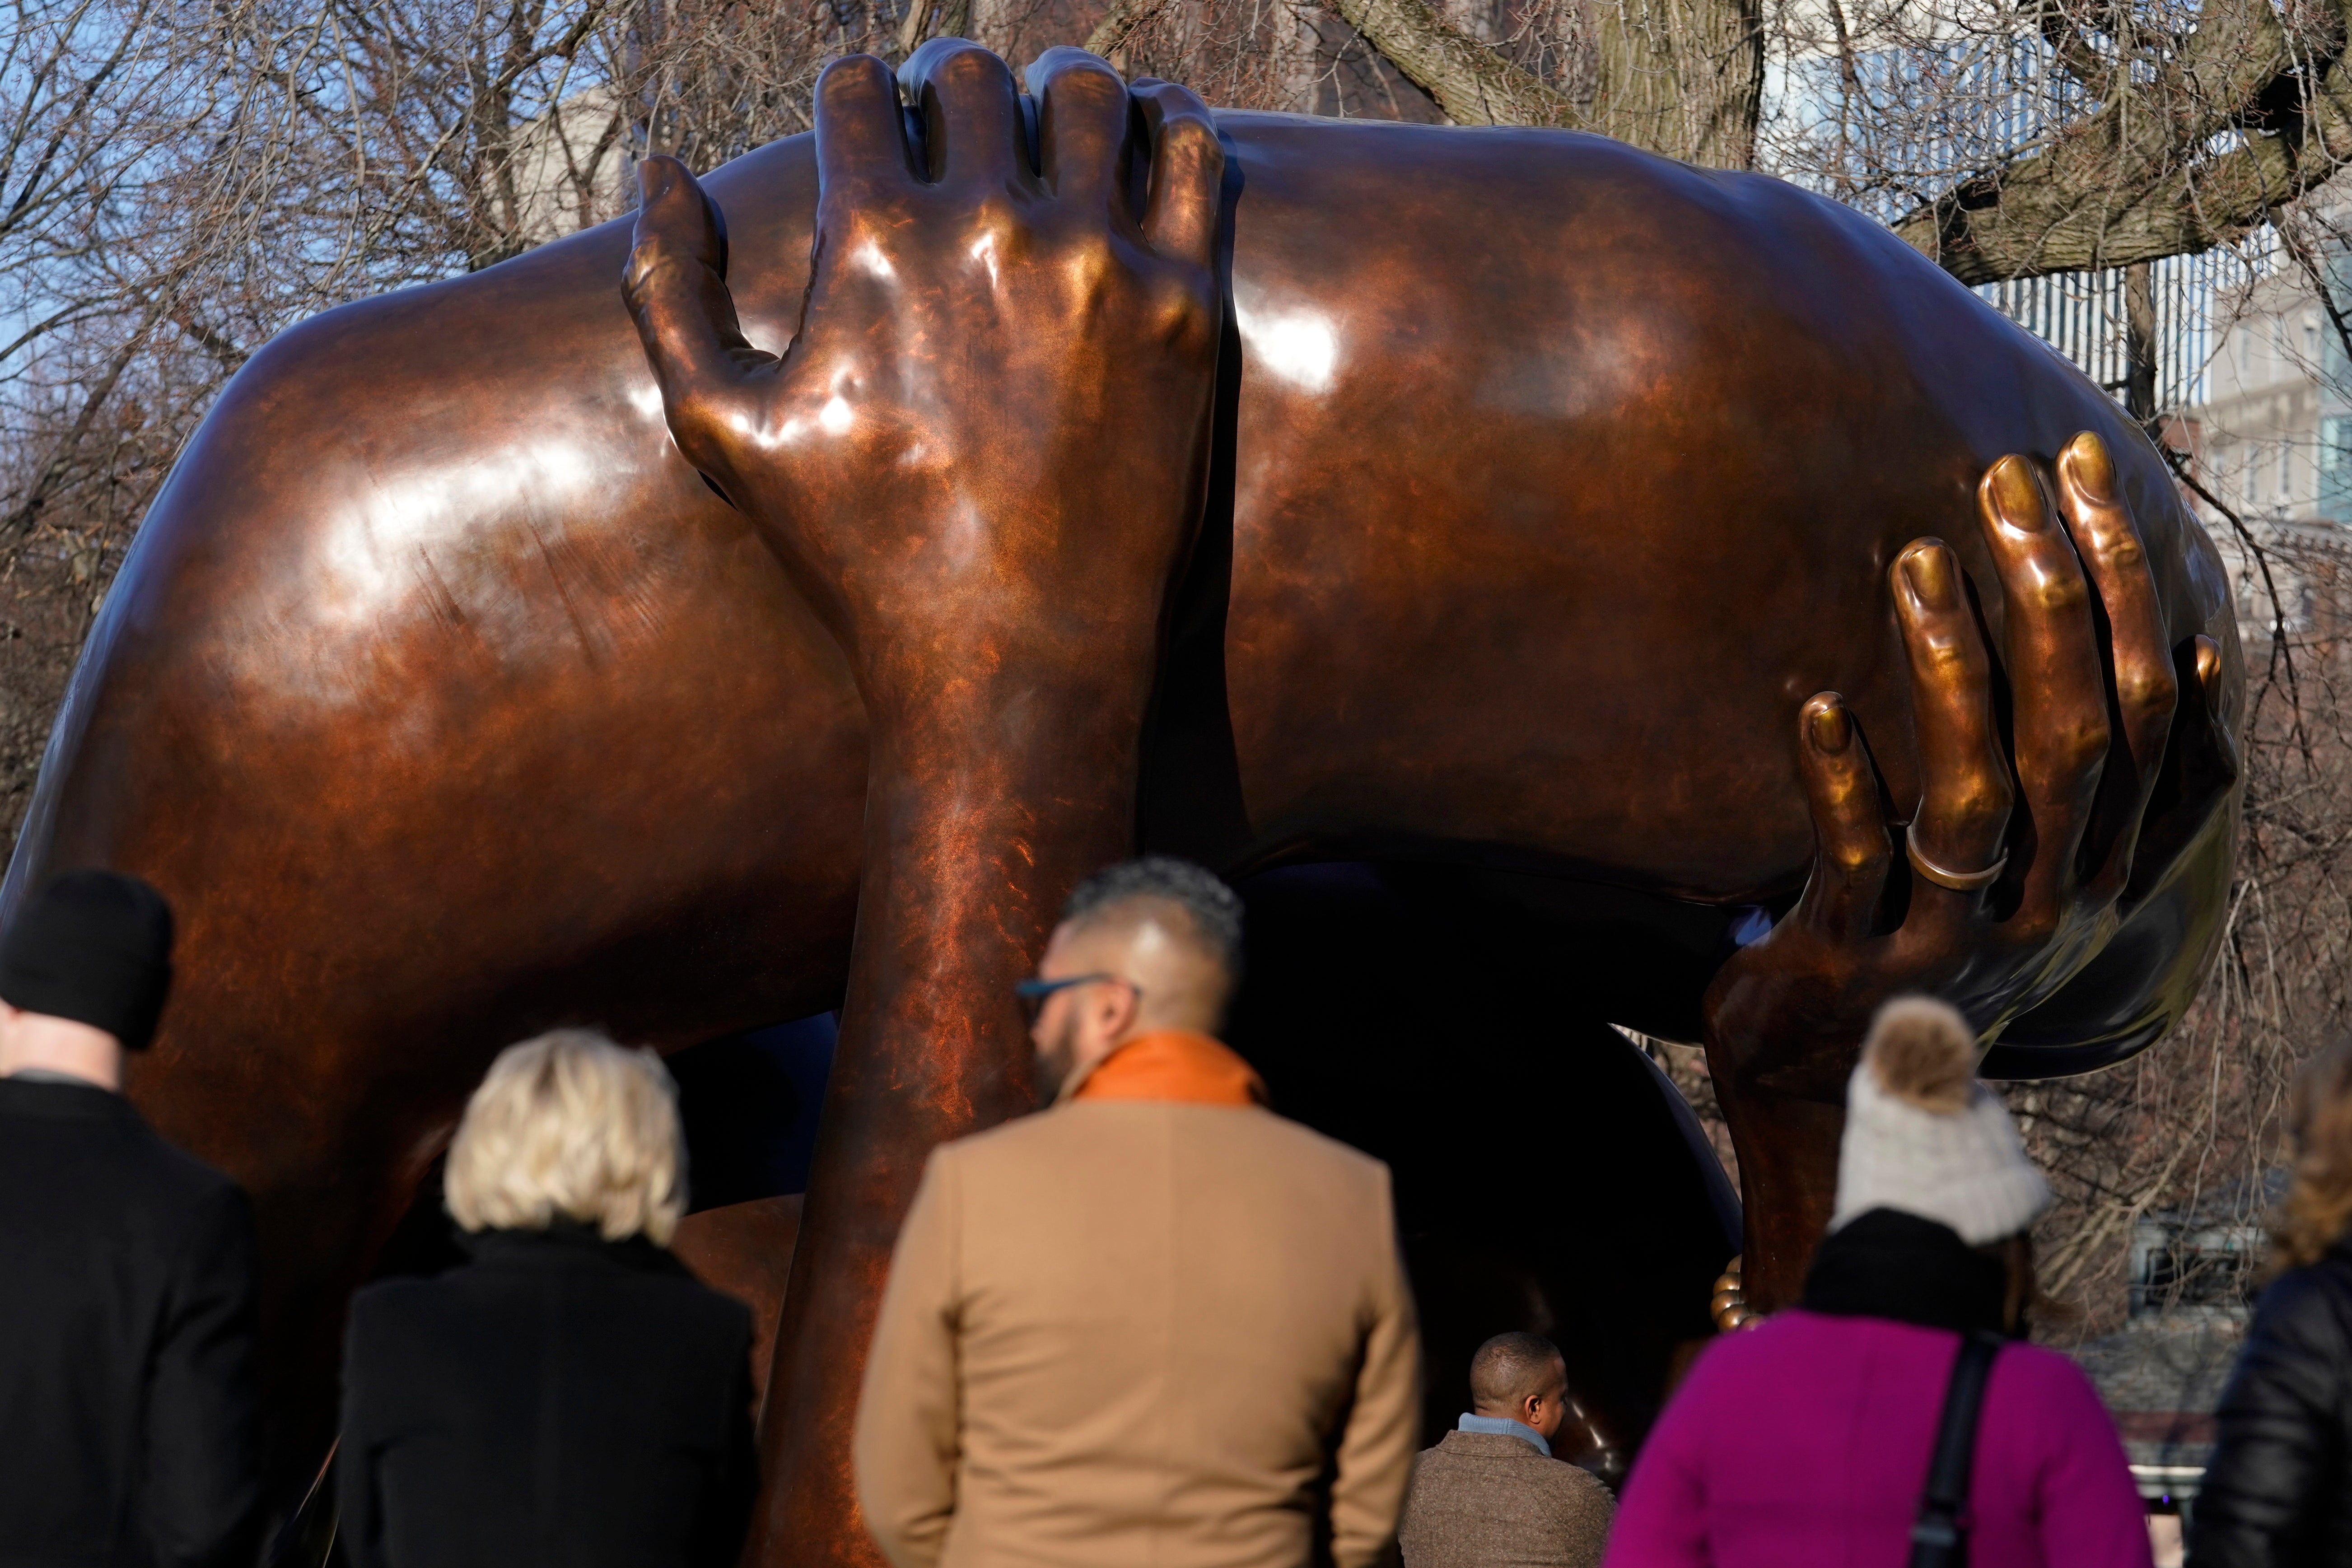 La escultura de bronce de 7 metros de altura ‘The Embrace’, en memoria de Martin Luther King Jr. y Coretta King, ha sido objeto de burlas en Internet